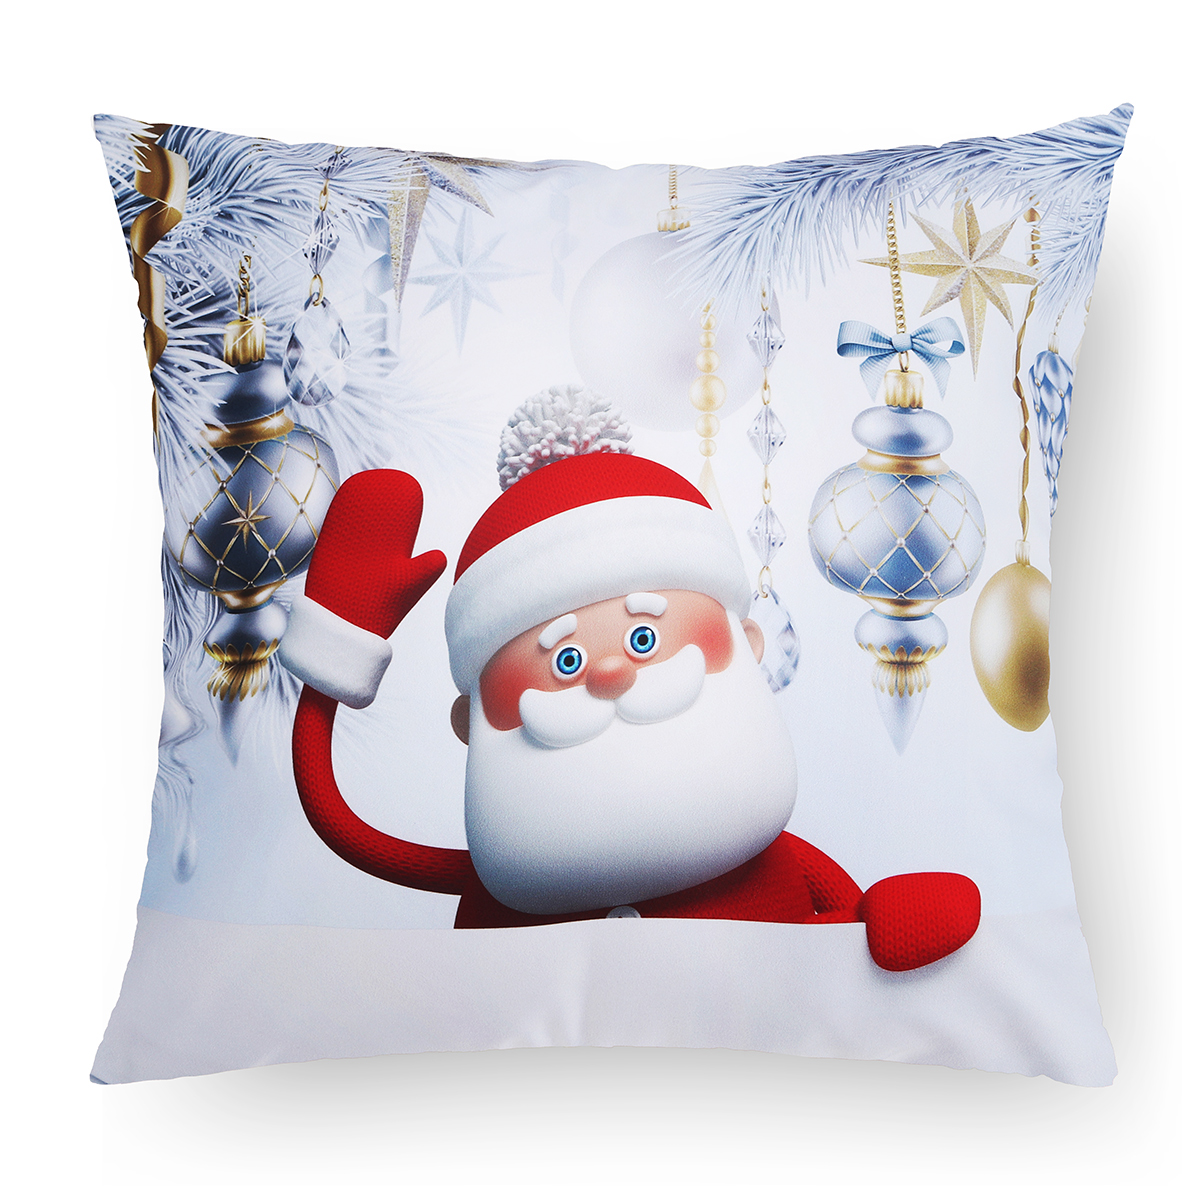 Merry Christmas Set Of 4 Throw Pillow Covers Christmas Gift 18x18